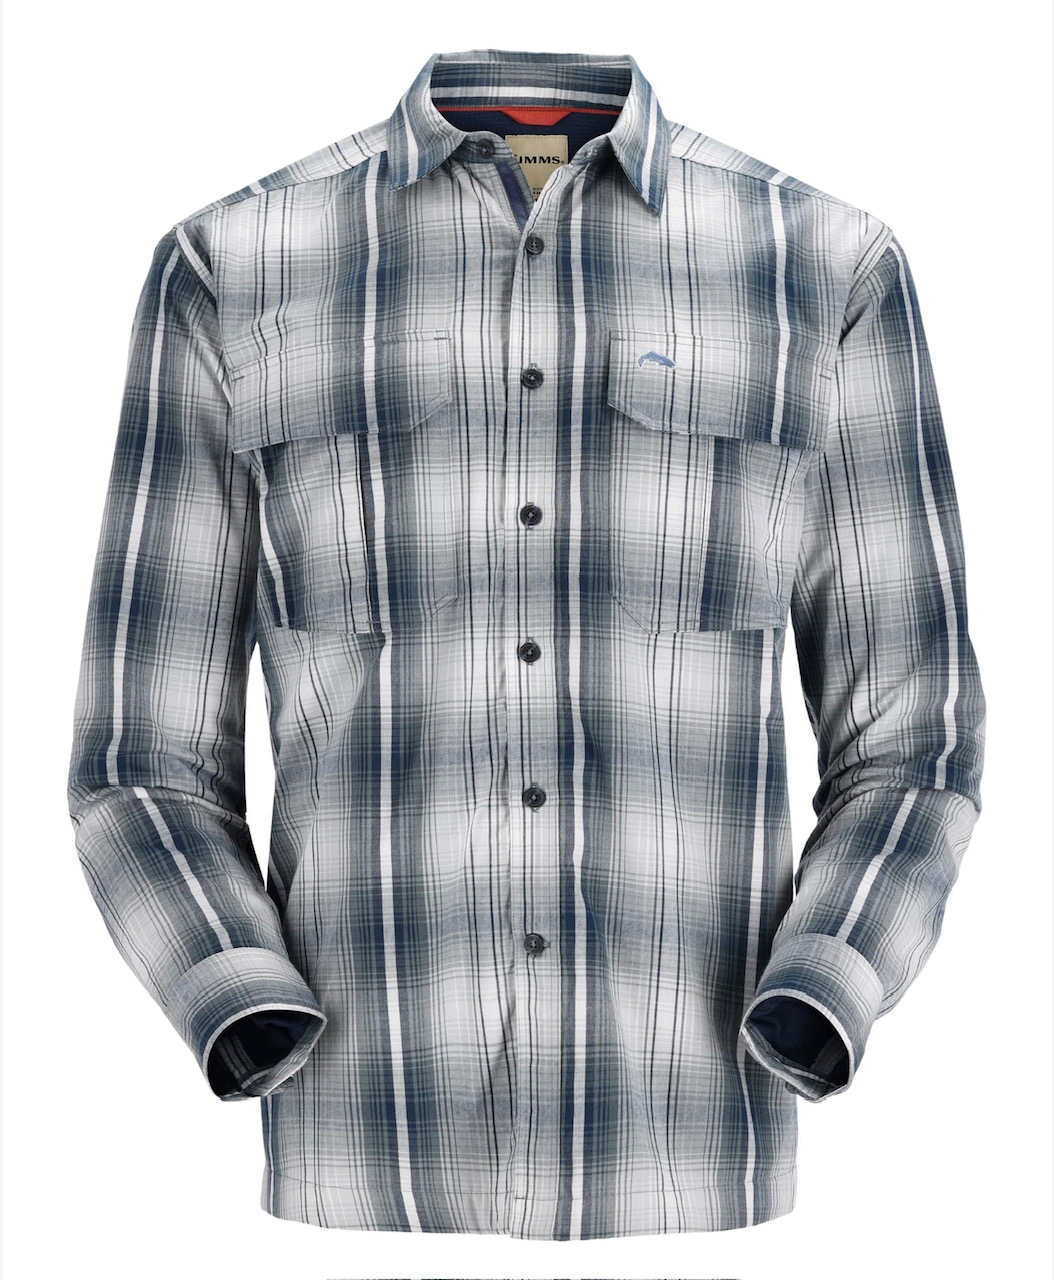 Simms M's Coldweather Shirt - Navy Sterling Plaid - Medium